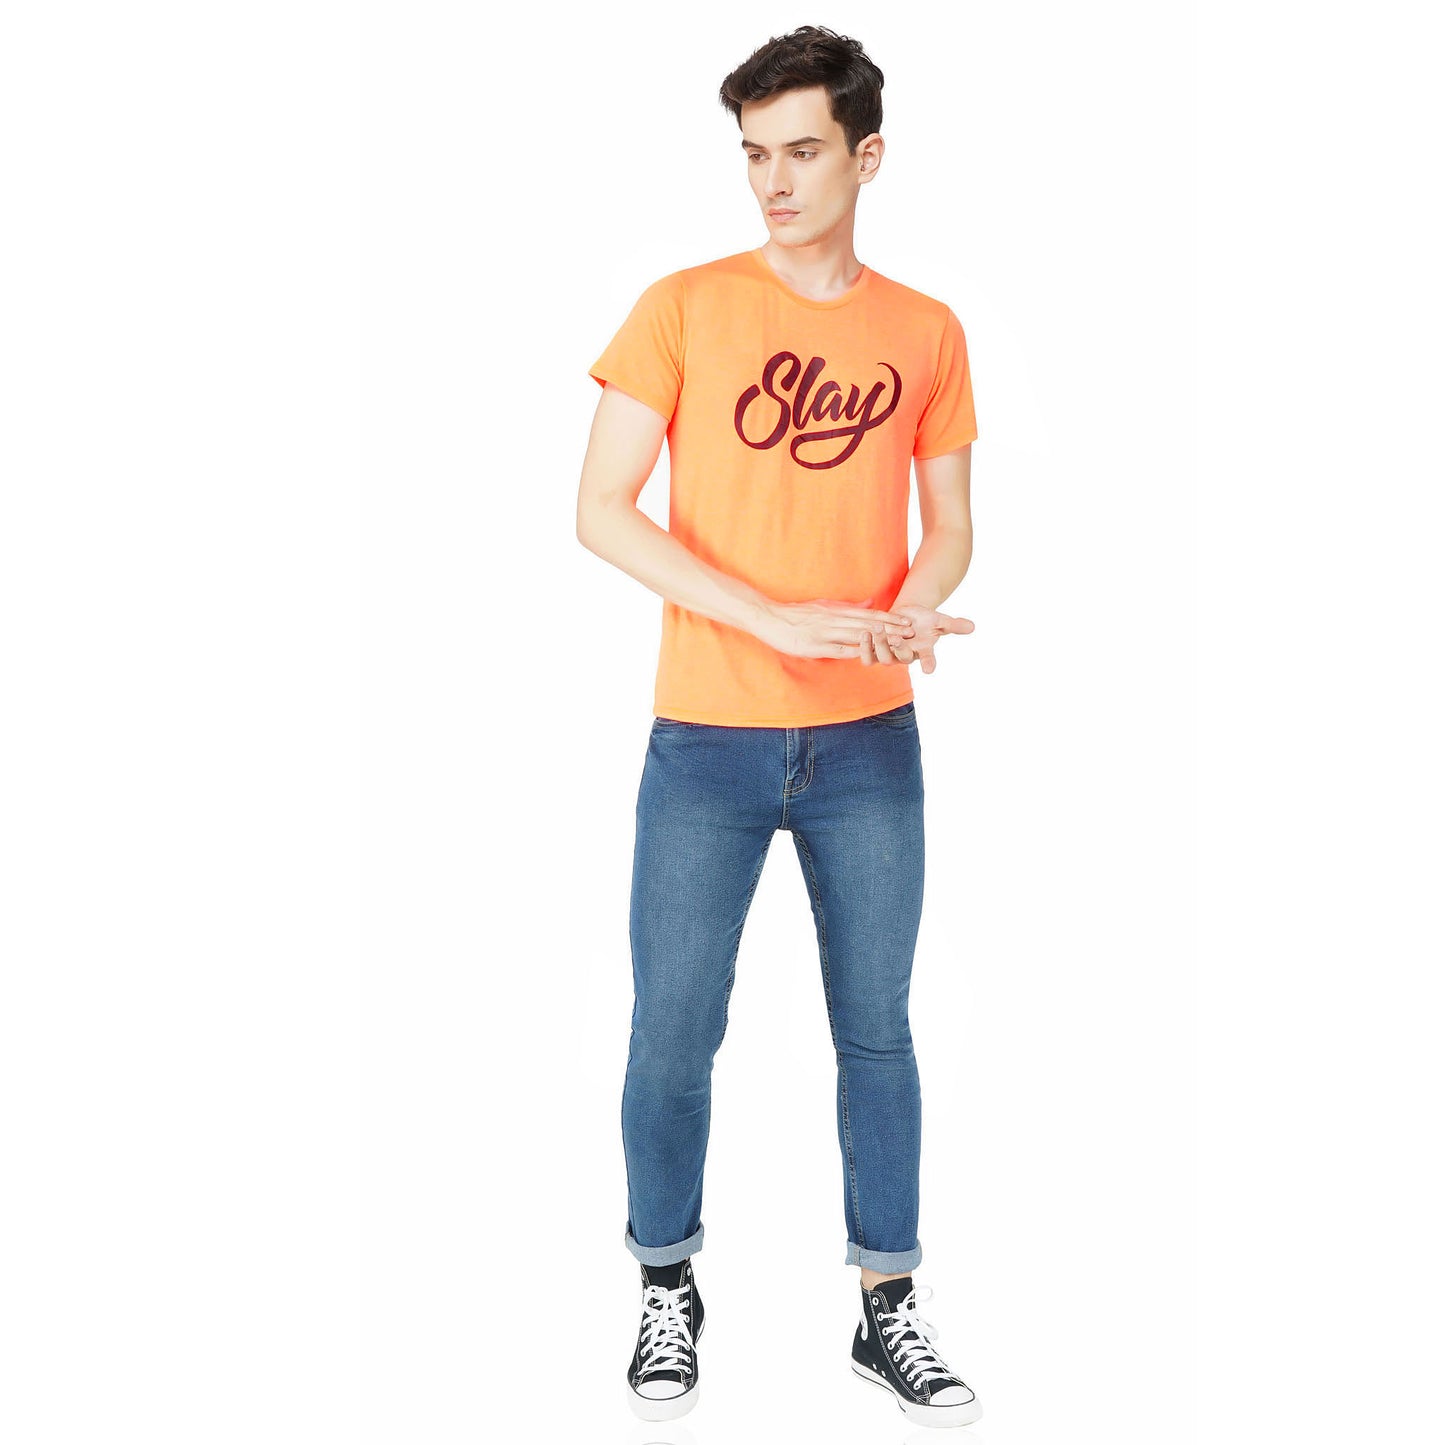 SLAY. Sport Men's Printed Neon Orange T-shirt-clothing-to-slay.myshopify.com-T-Shirt